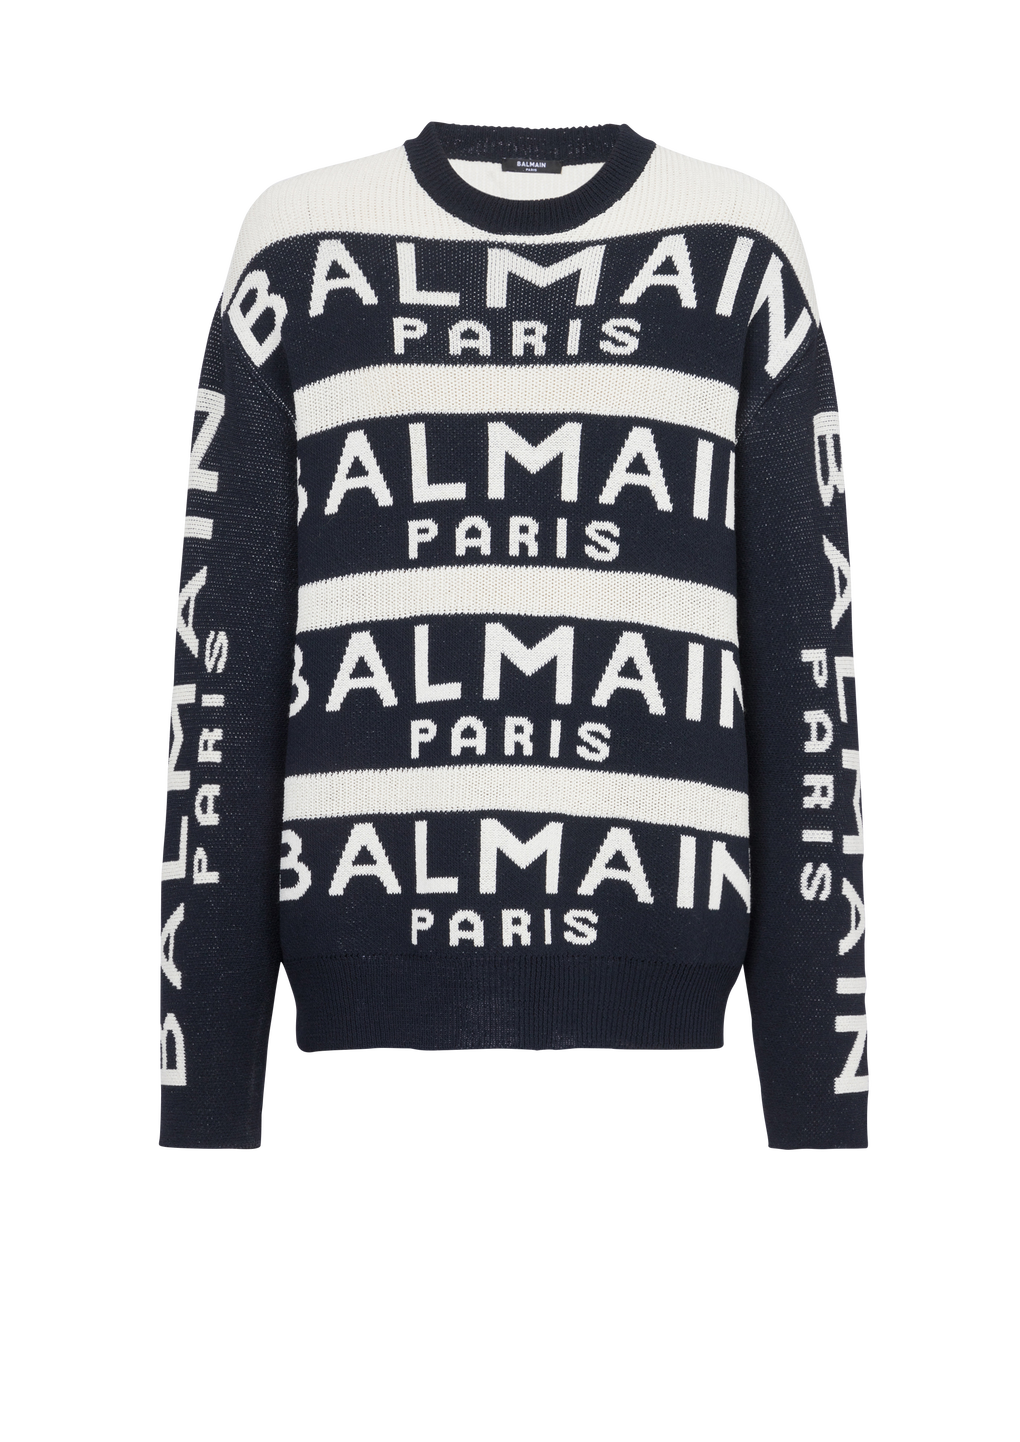 Balmain Paris 로고 자수 디테일 스웨터, 검정색, hi-res